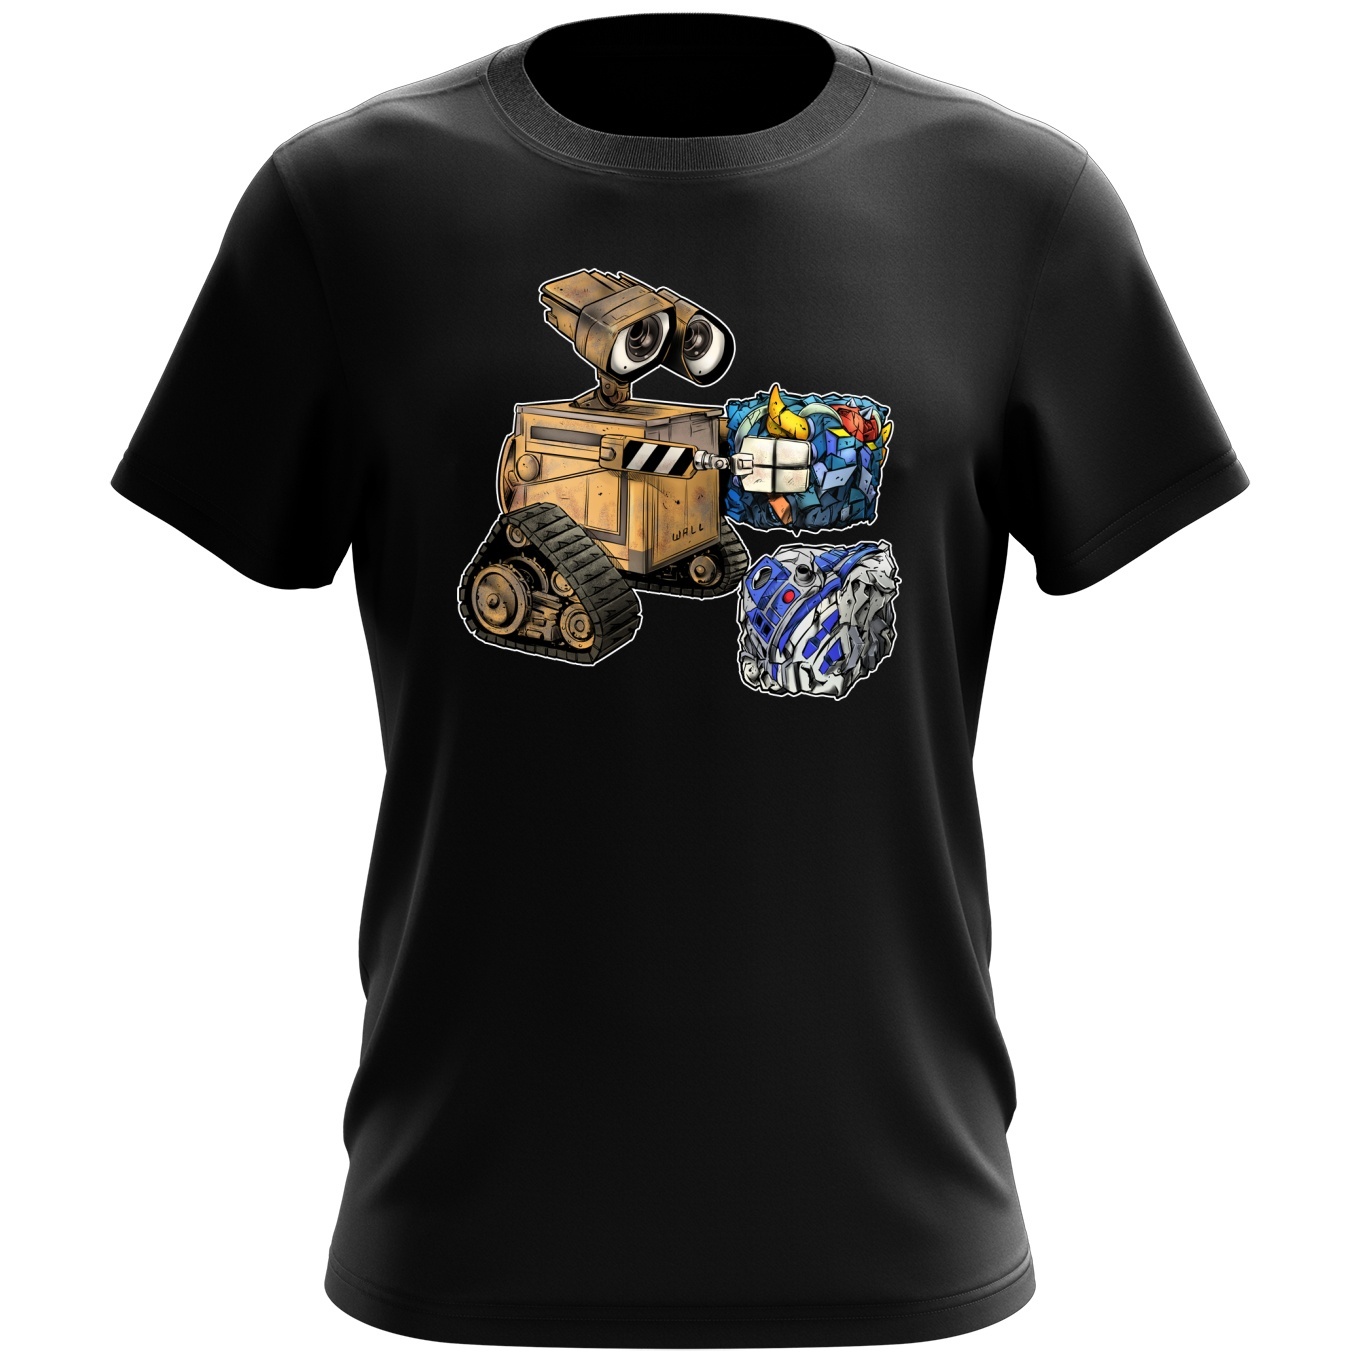 Star Wars Parody Black Men's T-shirt - Wall-E, Grendizer and R2-D2 (Funny  Star Wars Parody - High Quality T-shirt - Size 810 - Ref : 810)